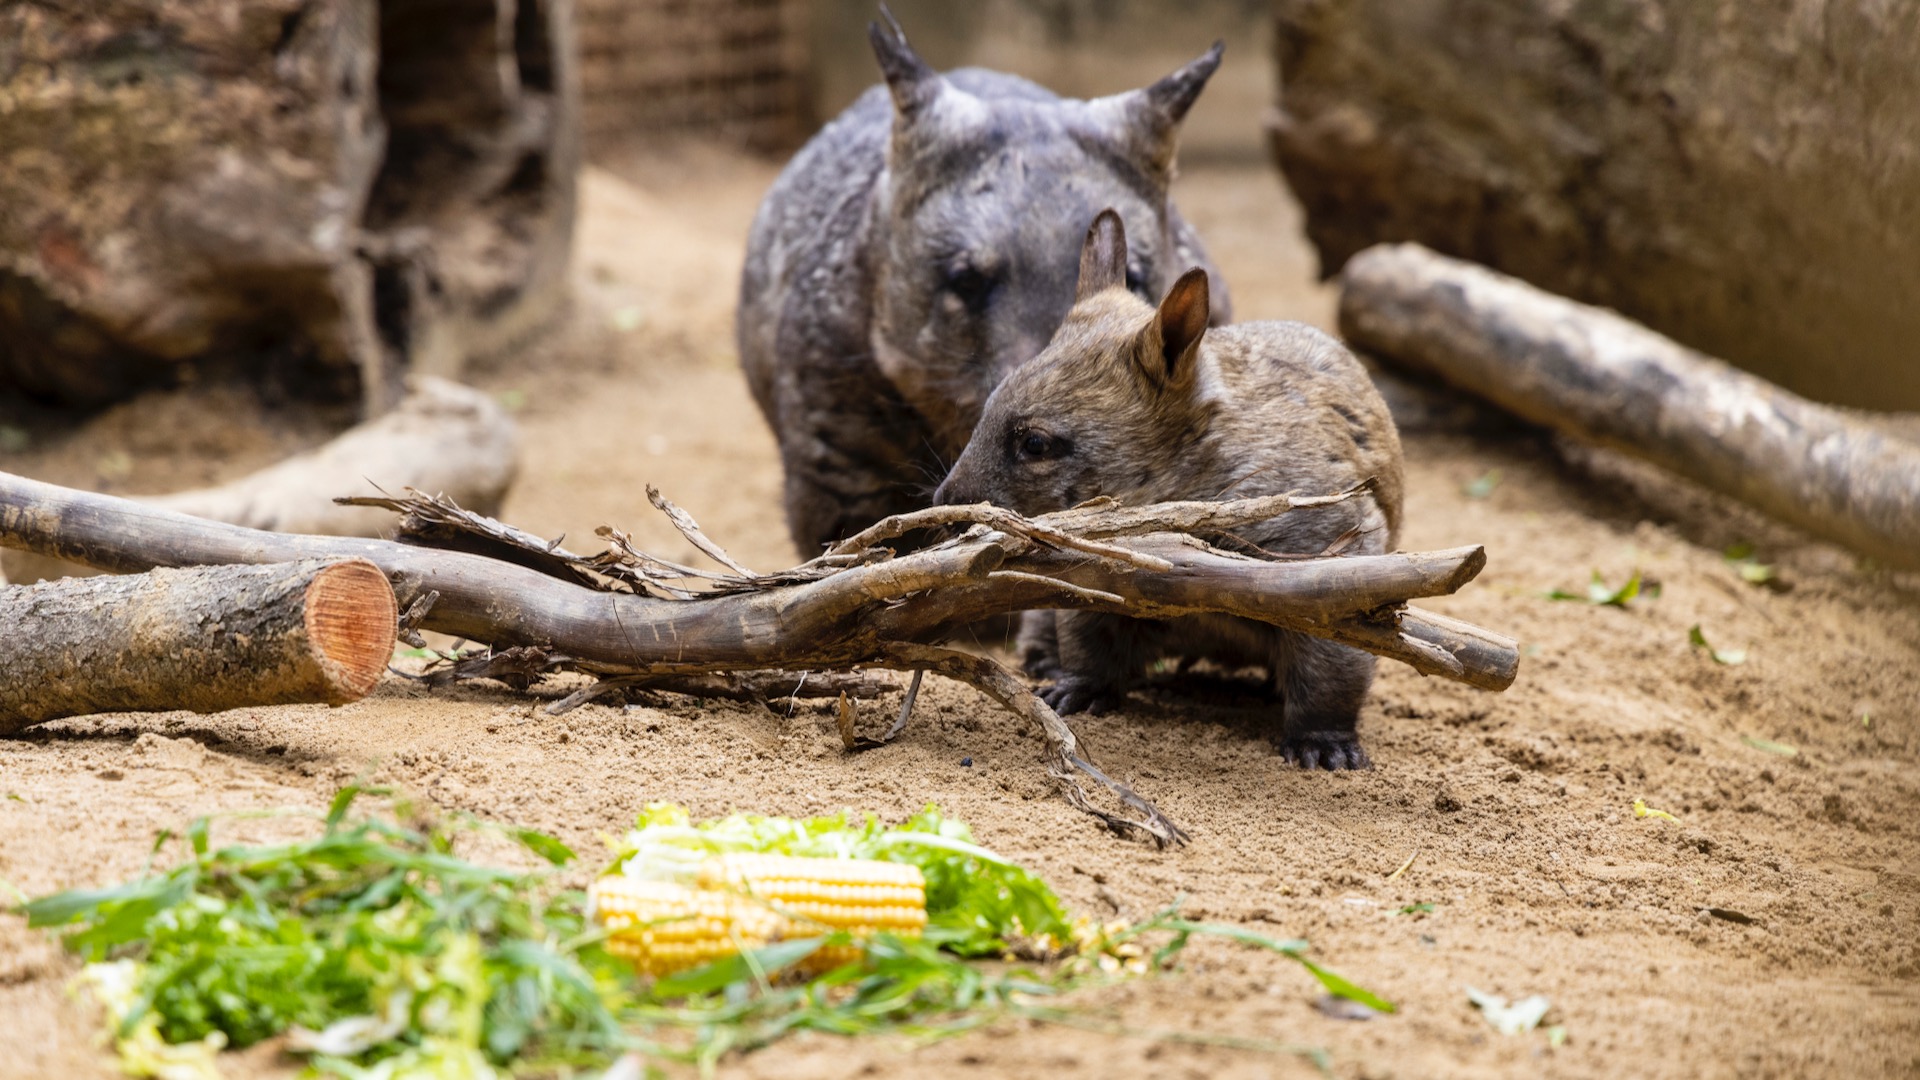 Wombat Joey arrives at Australia's Taronga Zoo - Healthy Living + Travel